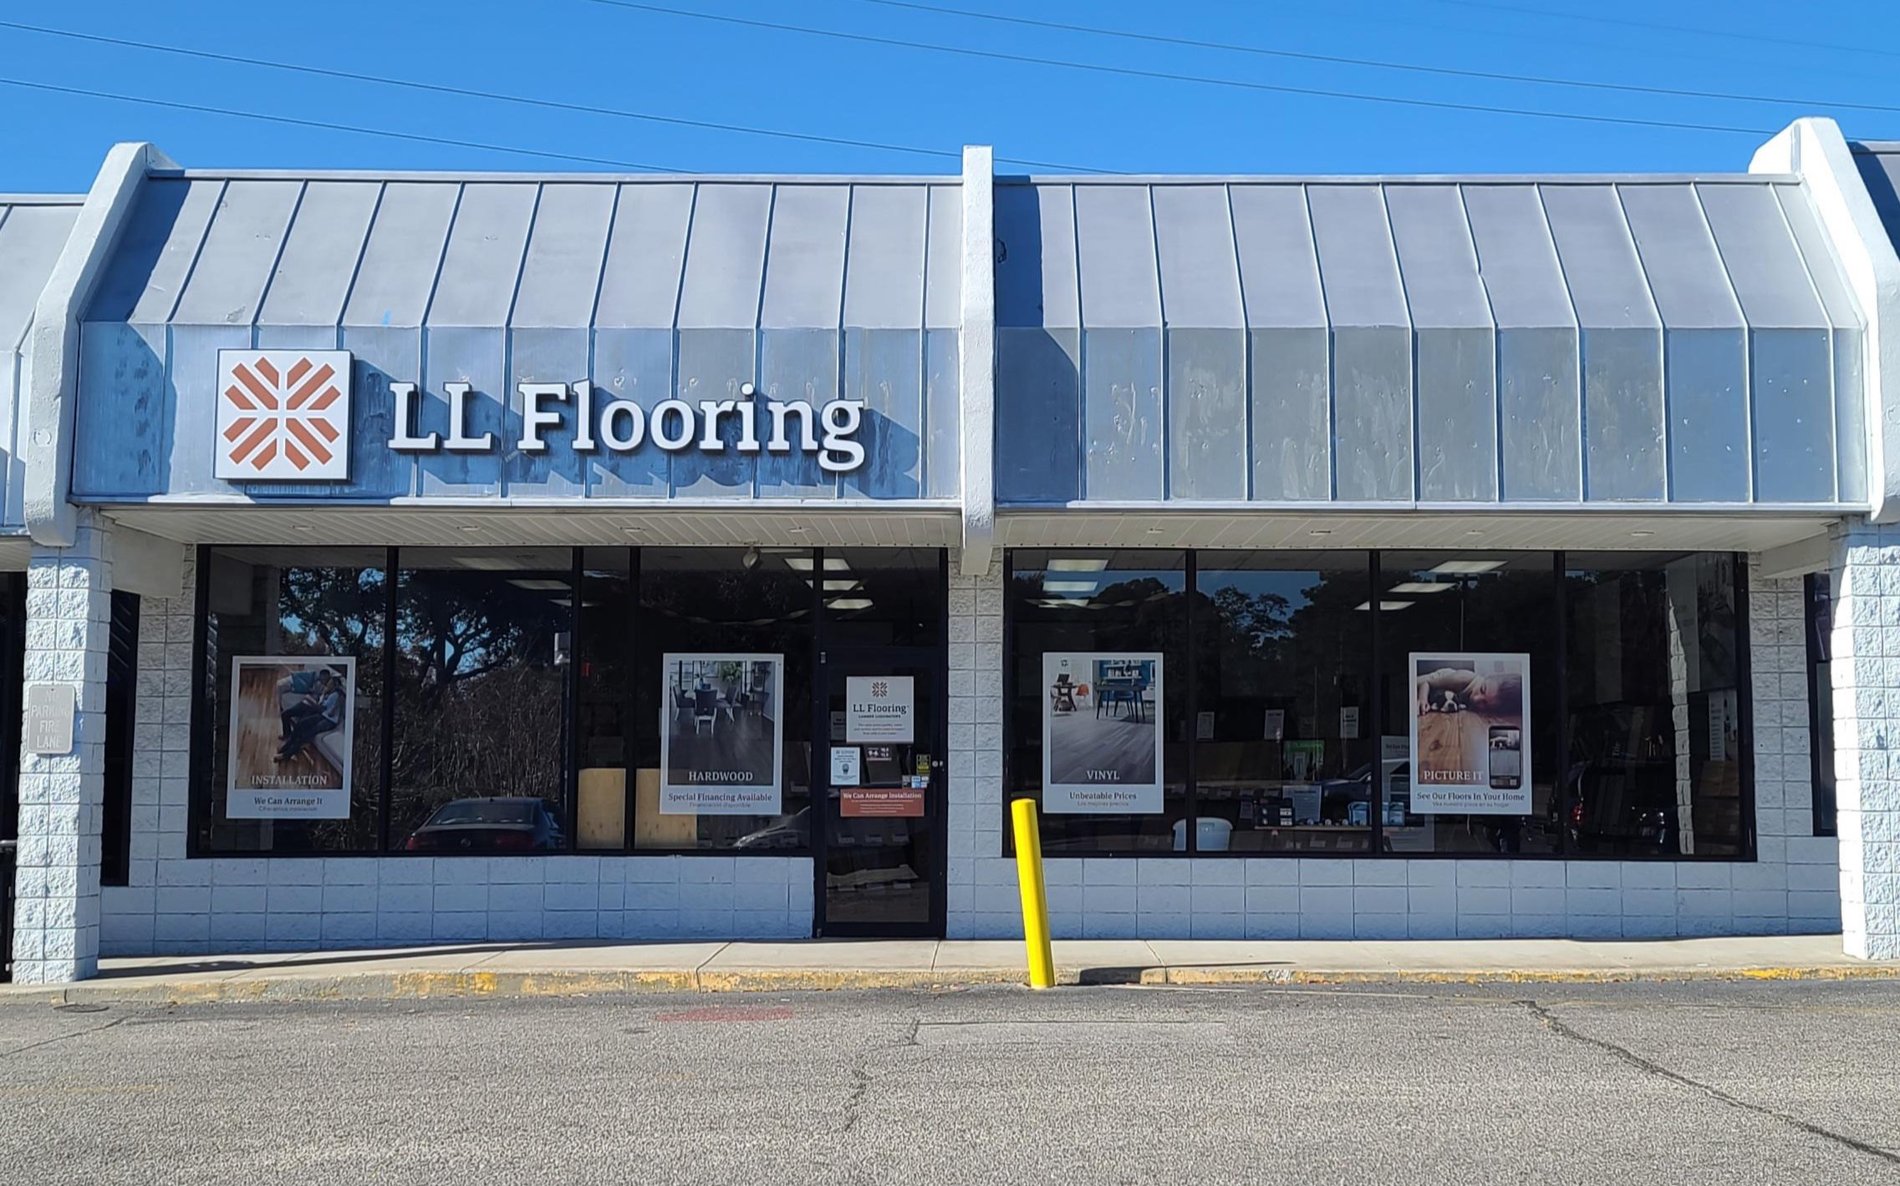 LL Flooring #1381 Murrells Inlet | 3338 US 17 Bus | Storefront